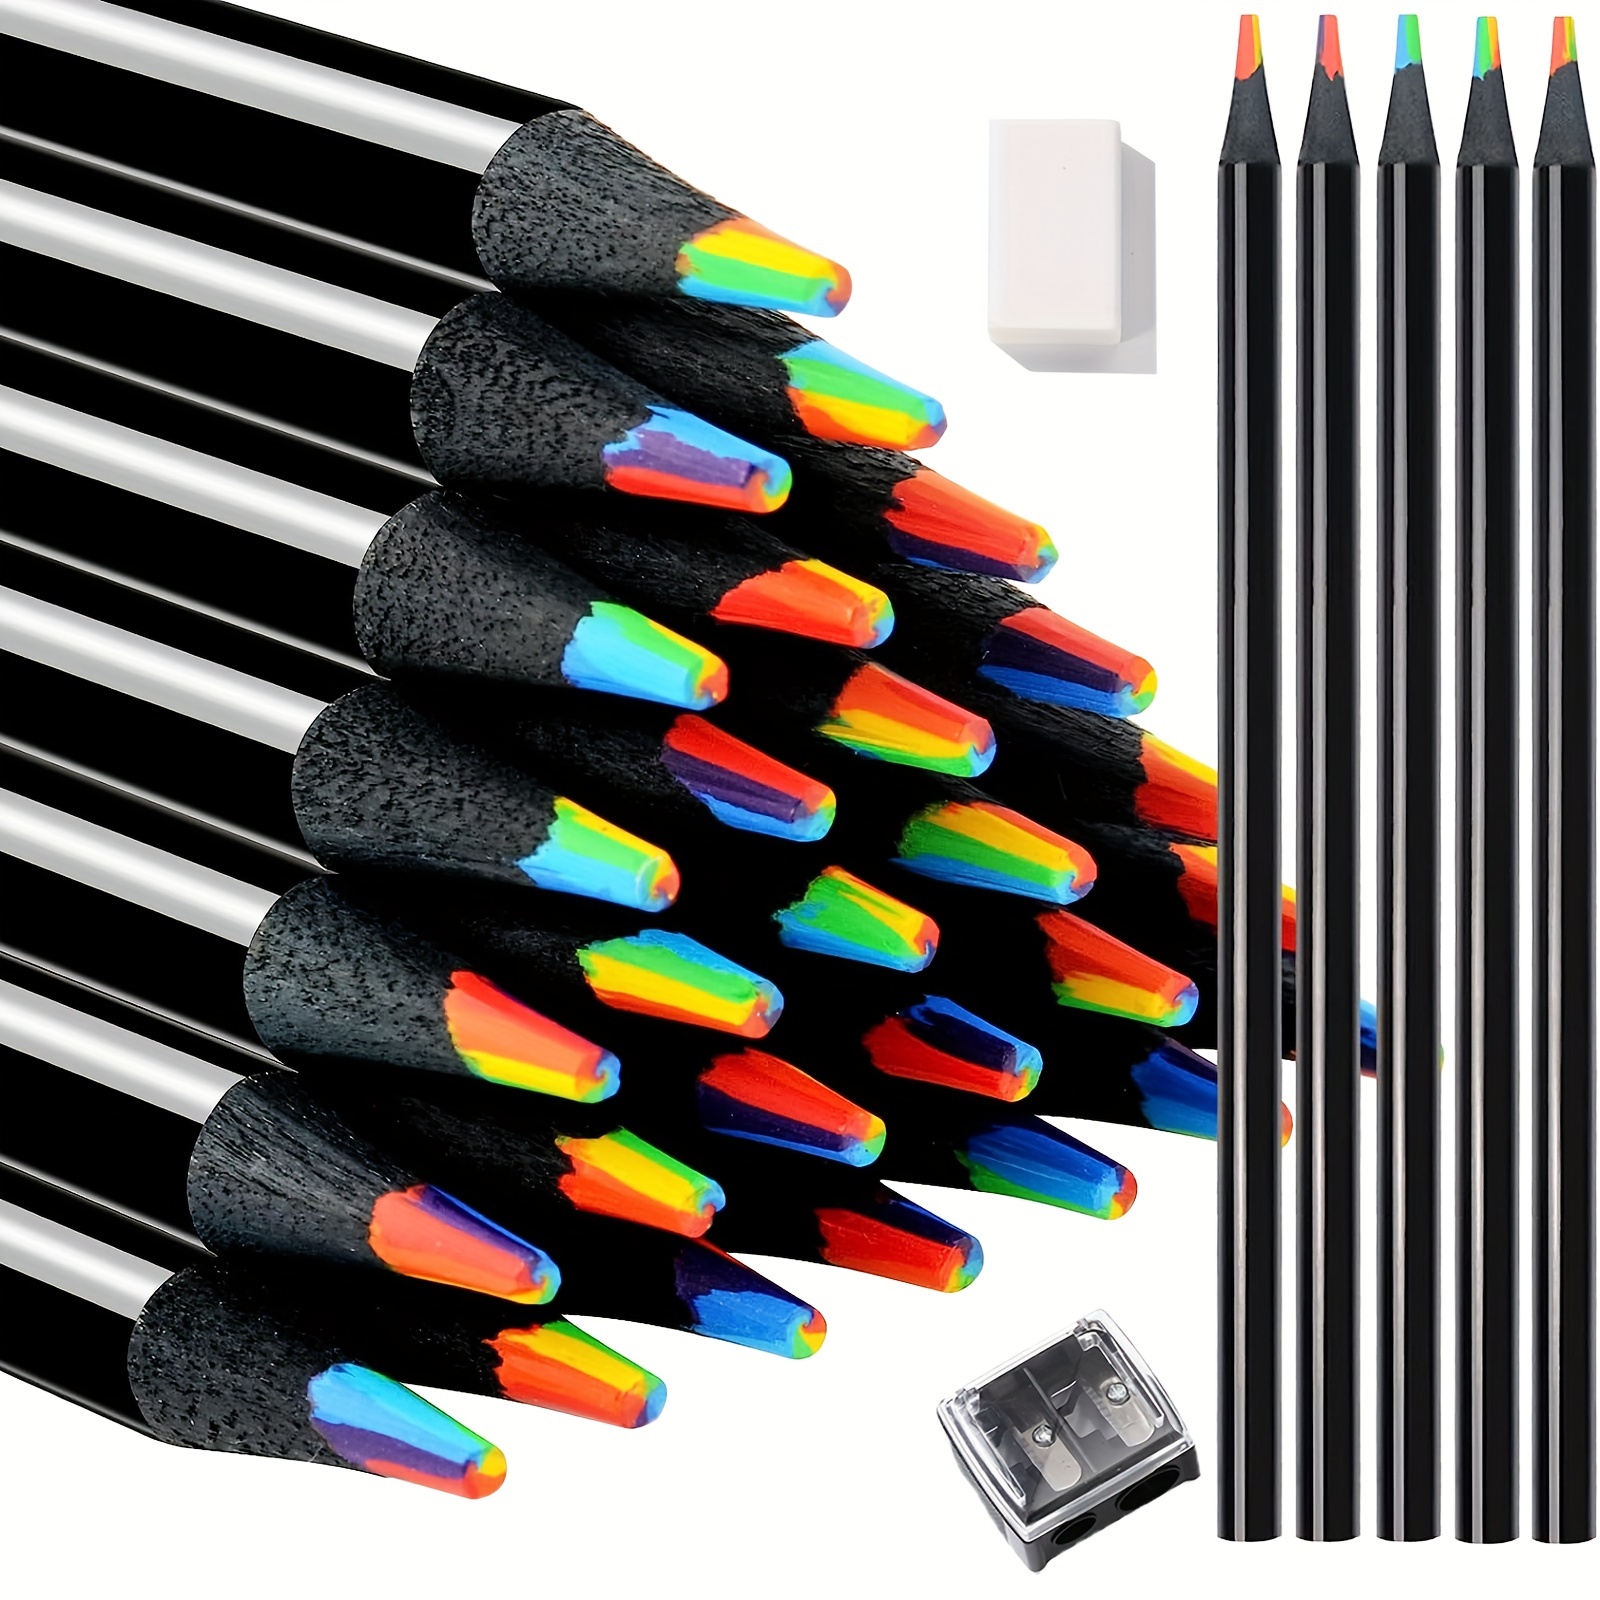 Colored Pencils, 72 Colors, Colored Pencils For Color Pencil Set Colored  Pencils Bulk Art Pencils Lapices De Colores Map Pencils Professional  Colored